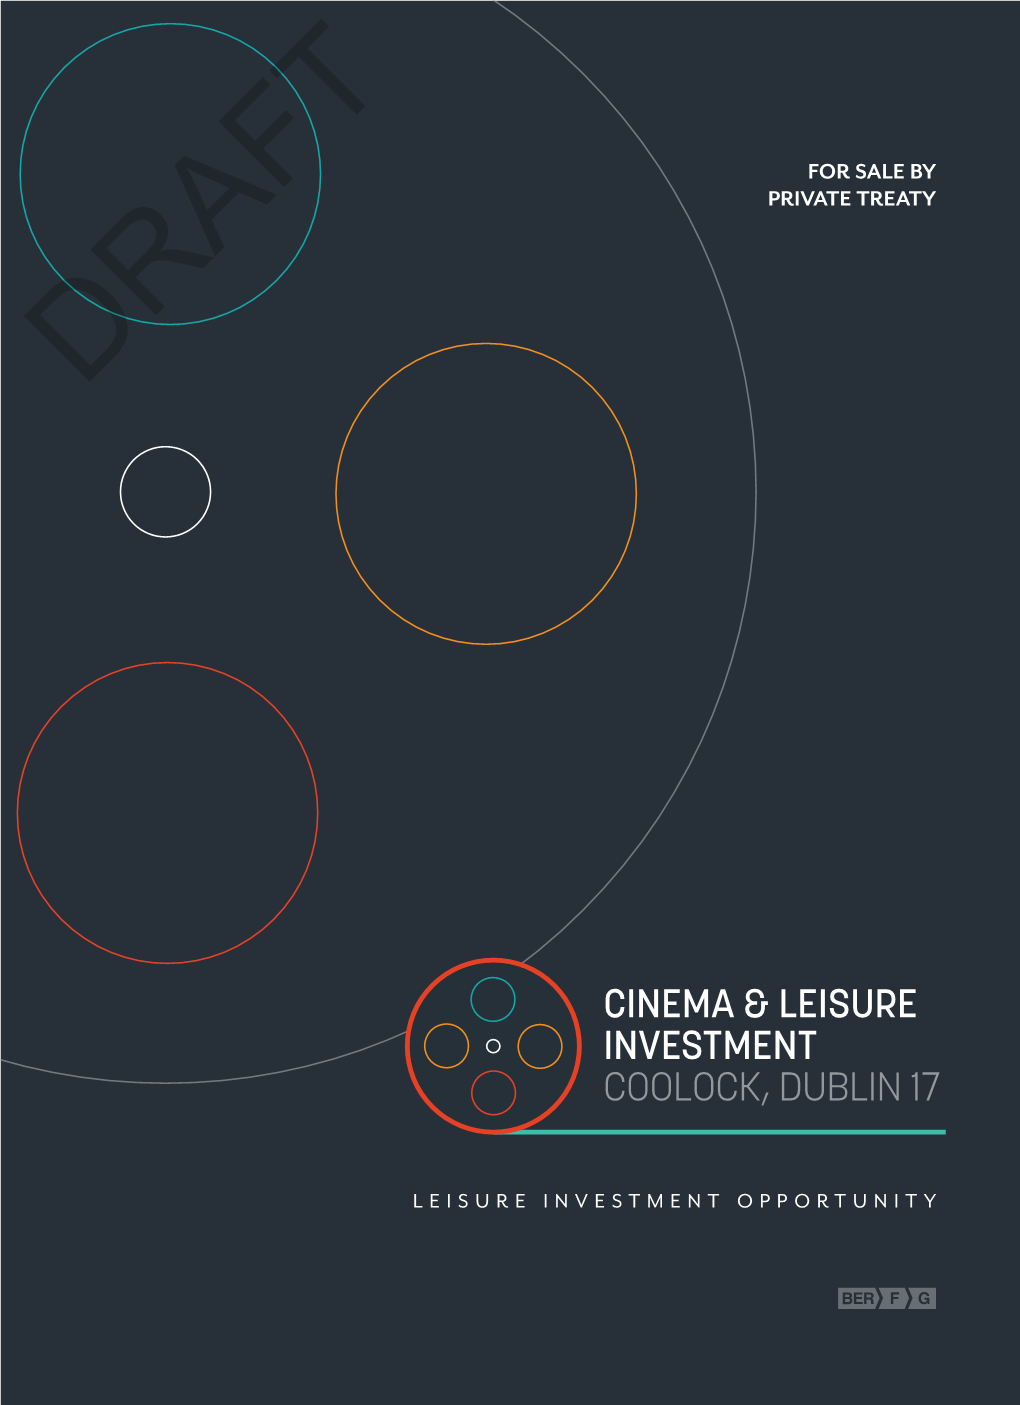 Cinema & Leisure Investment Coolock, Dublin 17